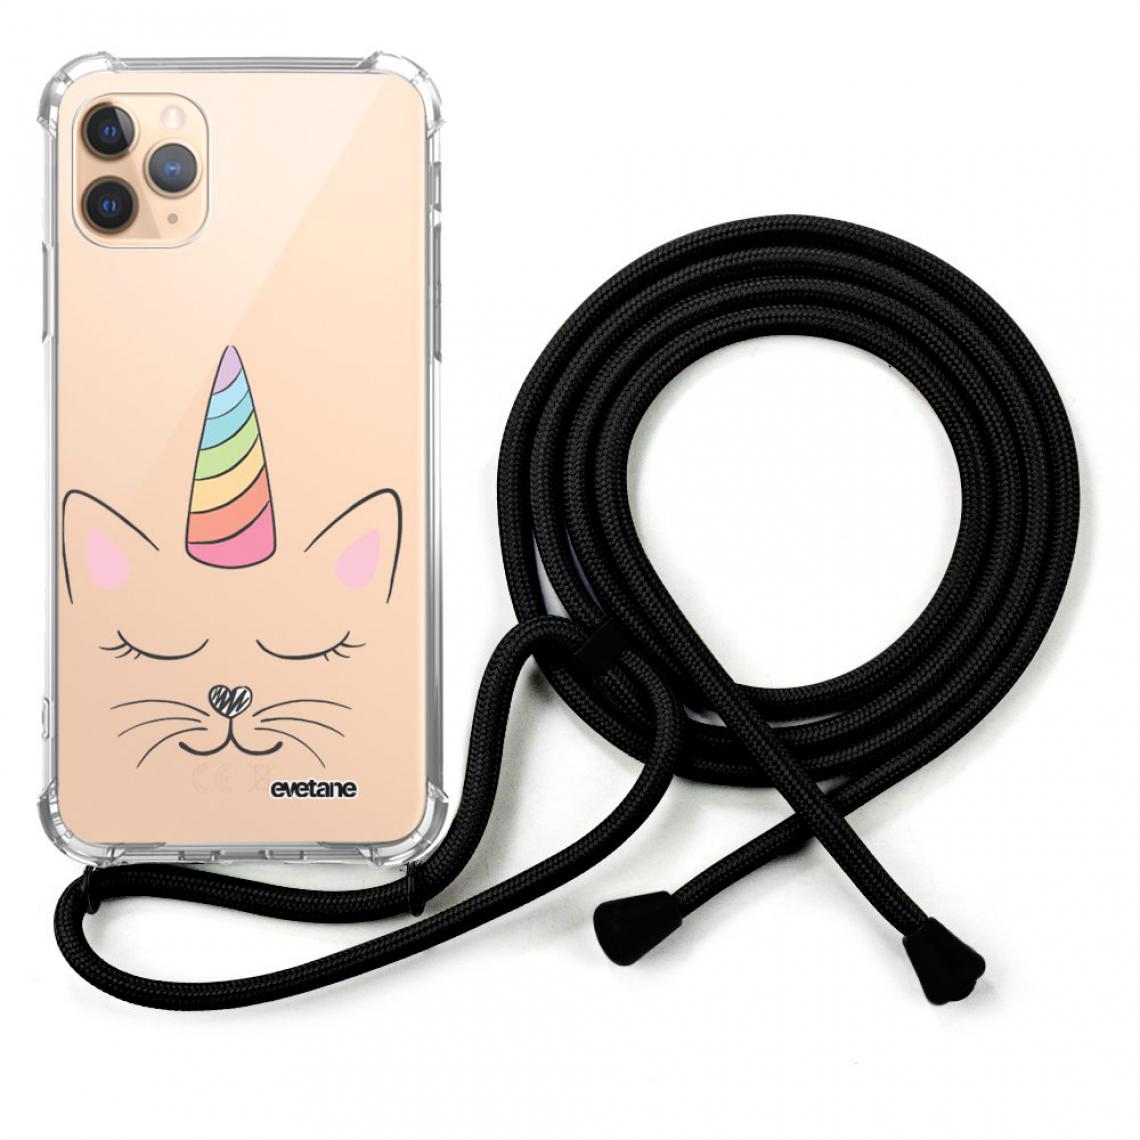 Evetane - Coque iPhone 11 Pro coque avec cordon transparente Chat licorne - Coque, étui smartphone